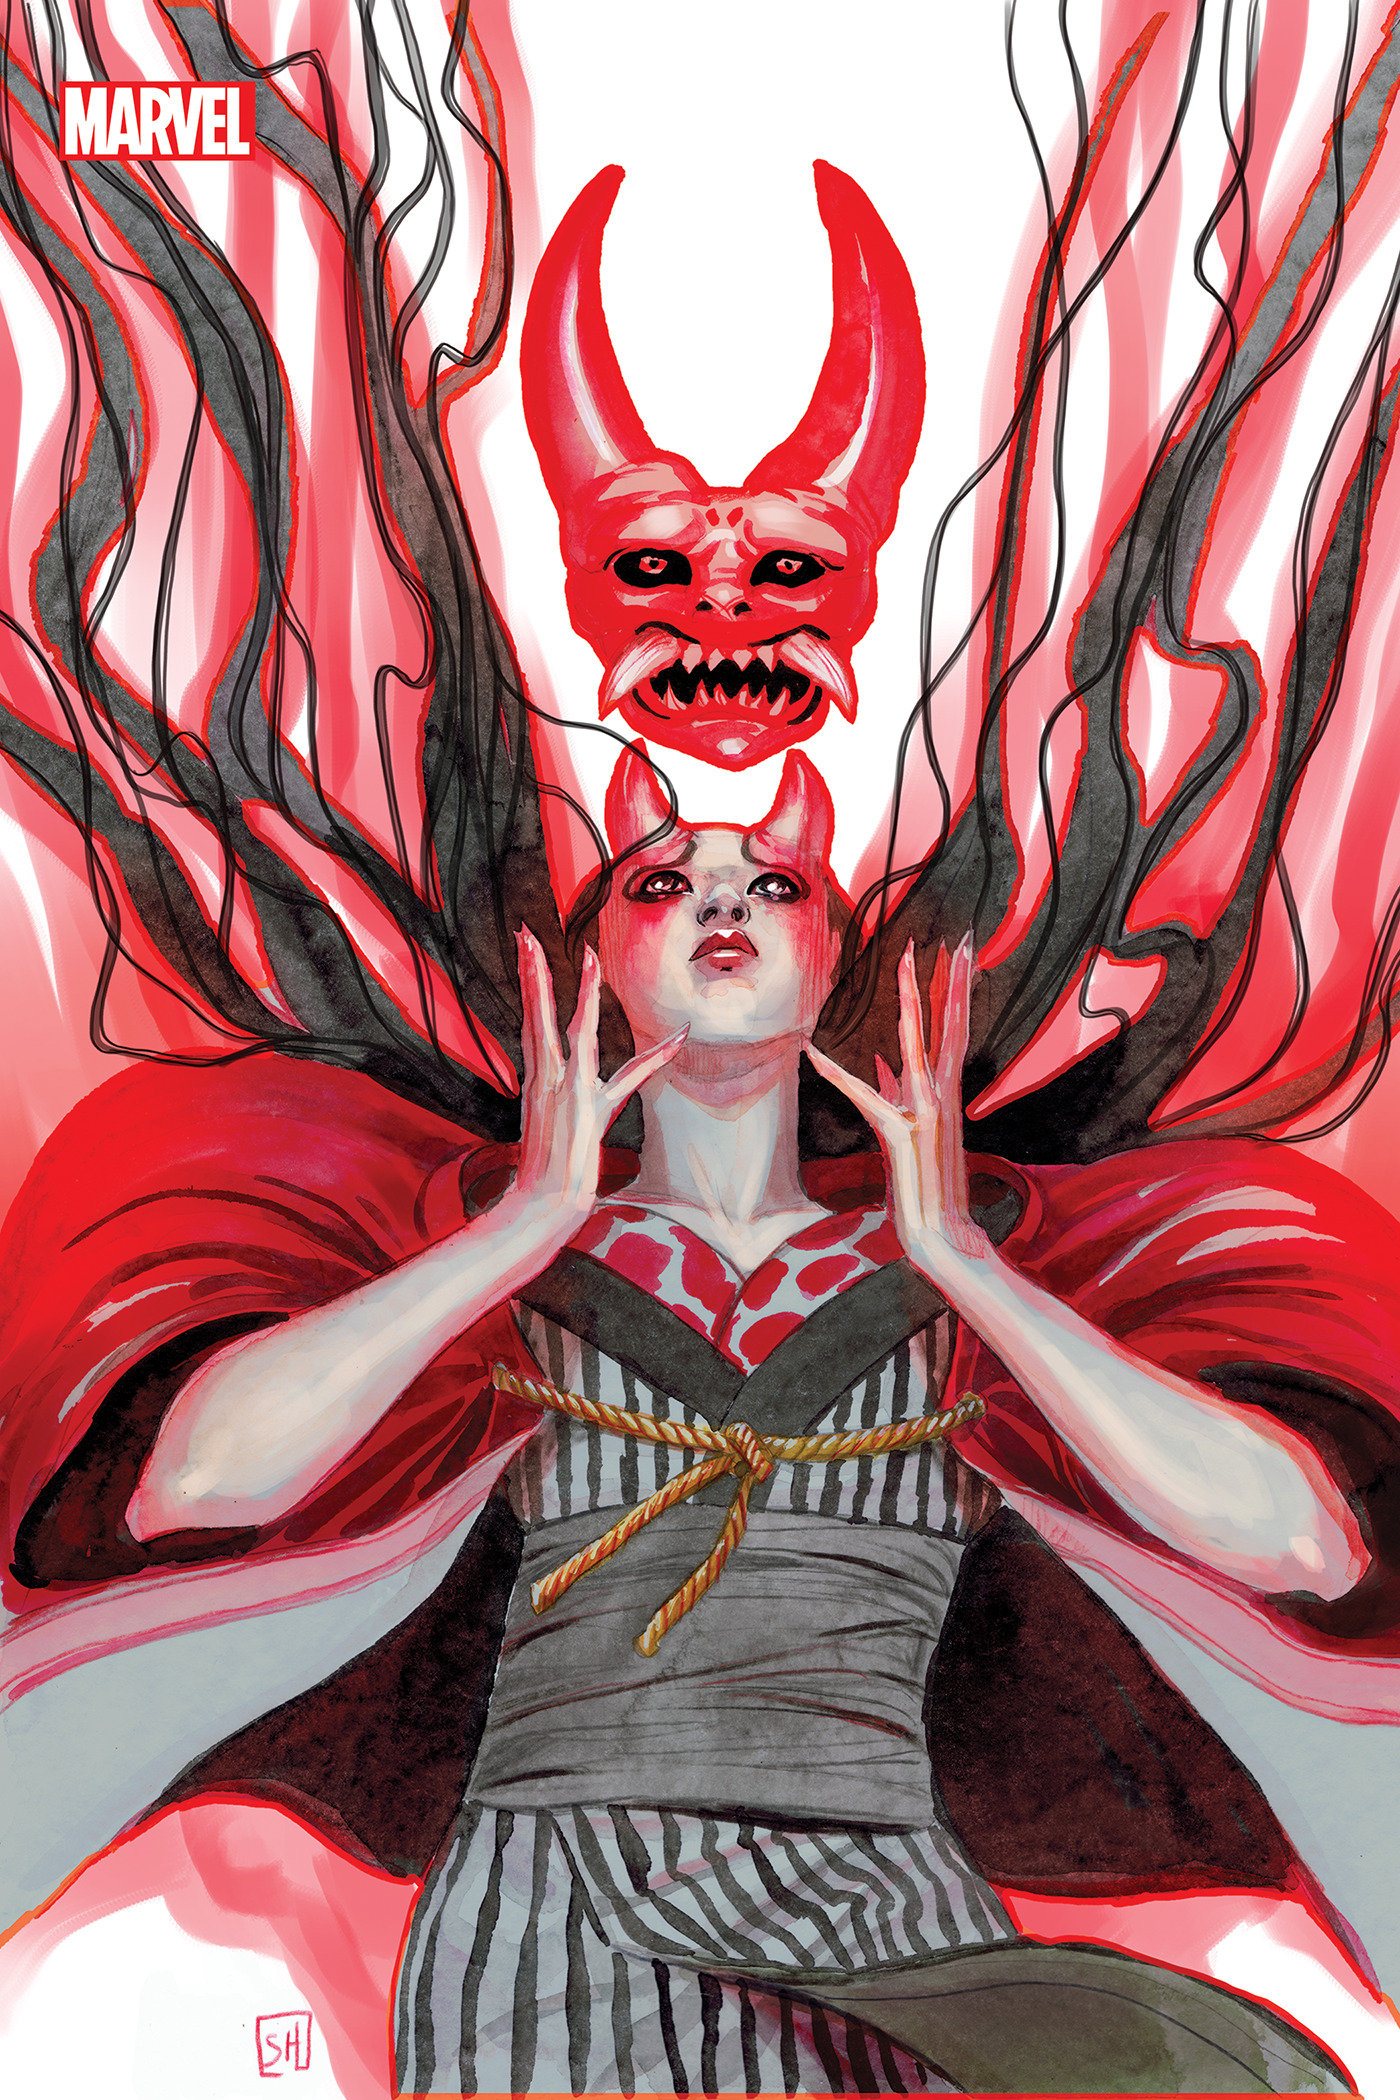 Demon Wars Scarlet Sin #1 1 for 50 Incentive Stephanie Hans Virgin Variant